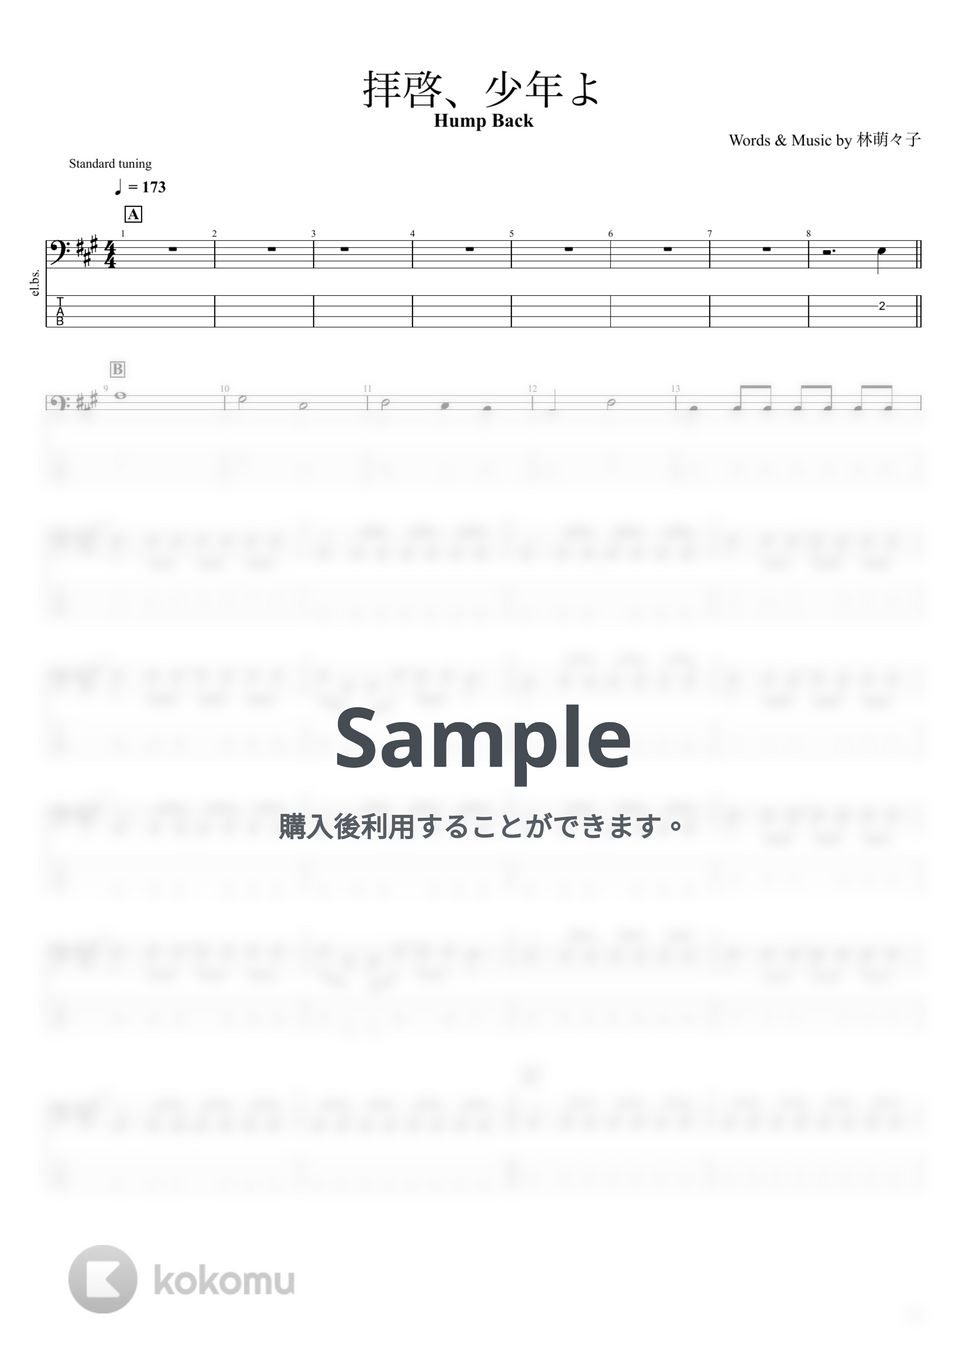 Hump Back - 拝啓、少年よ【ベースタブ譜】 by G's score